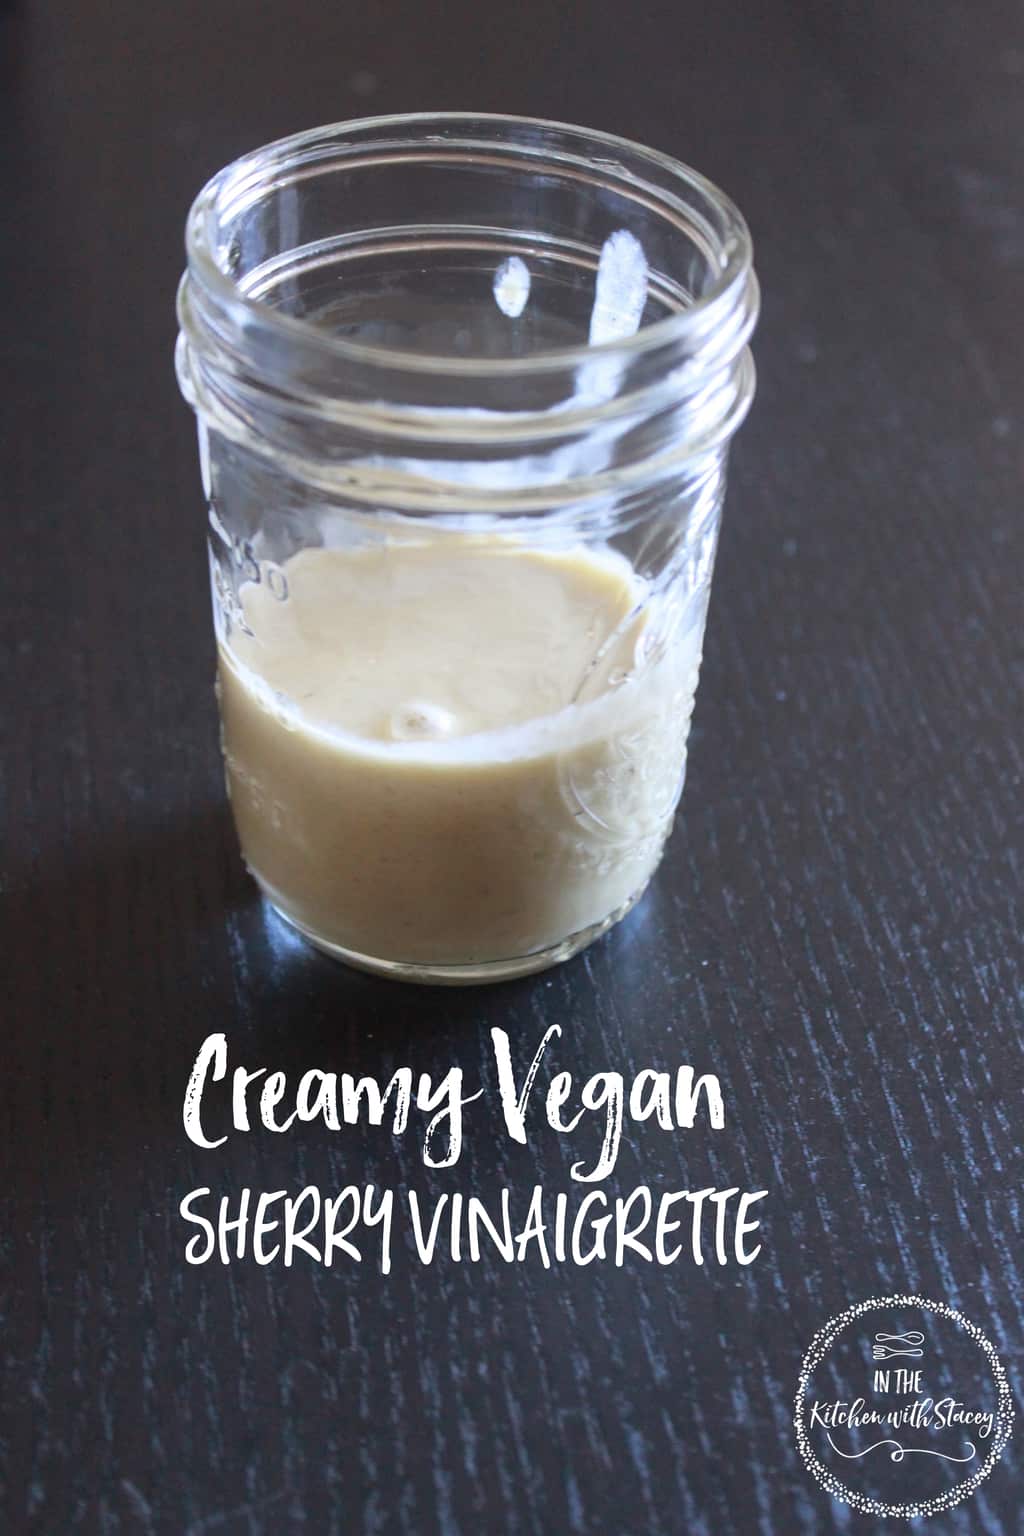 Creamy Vegan Sherry Vinaigrette